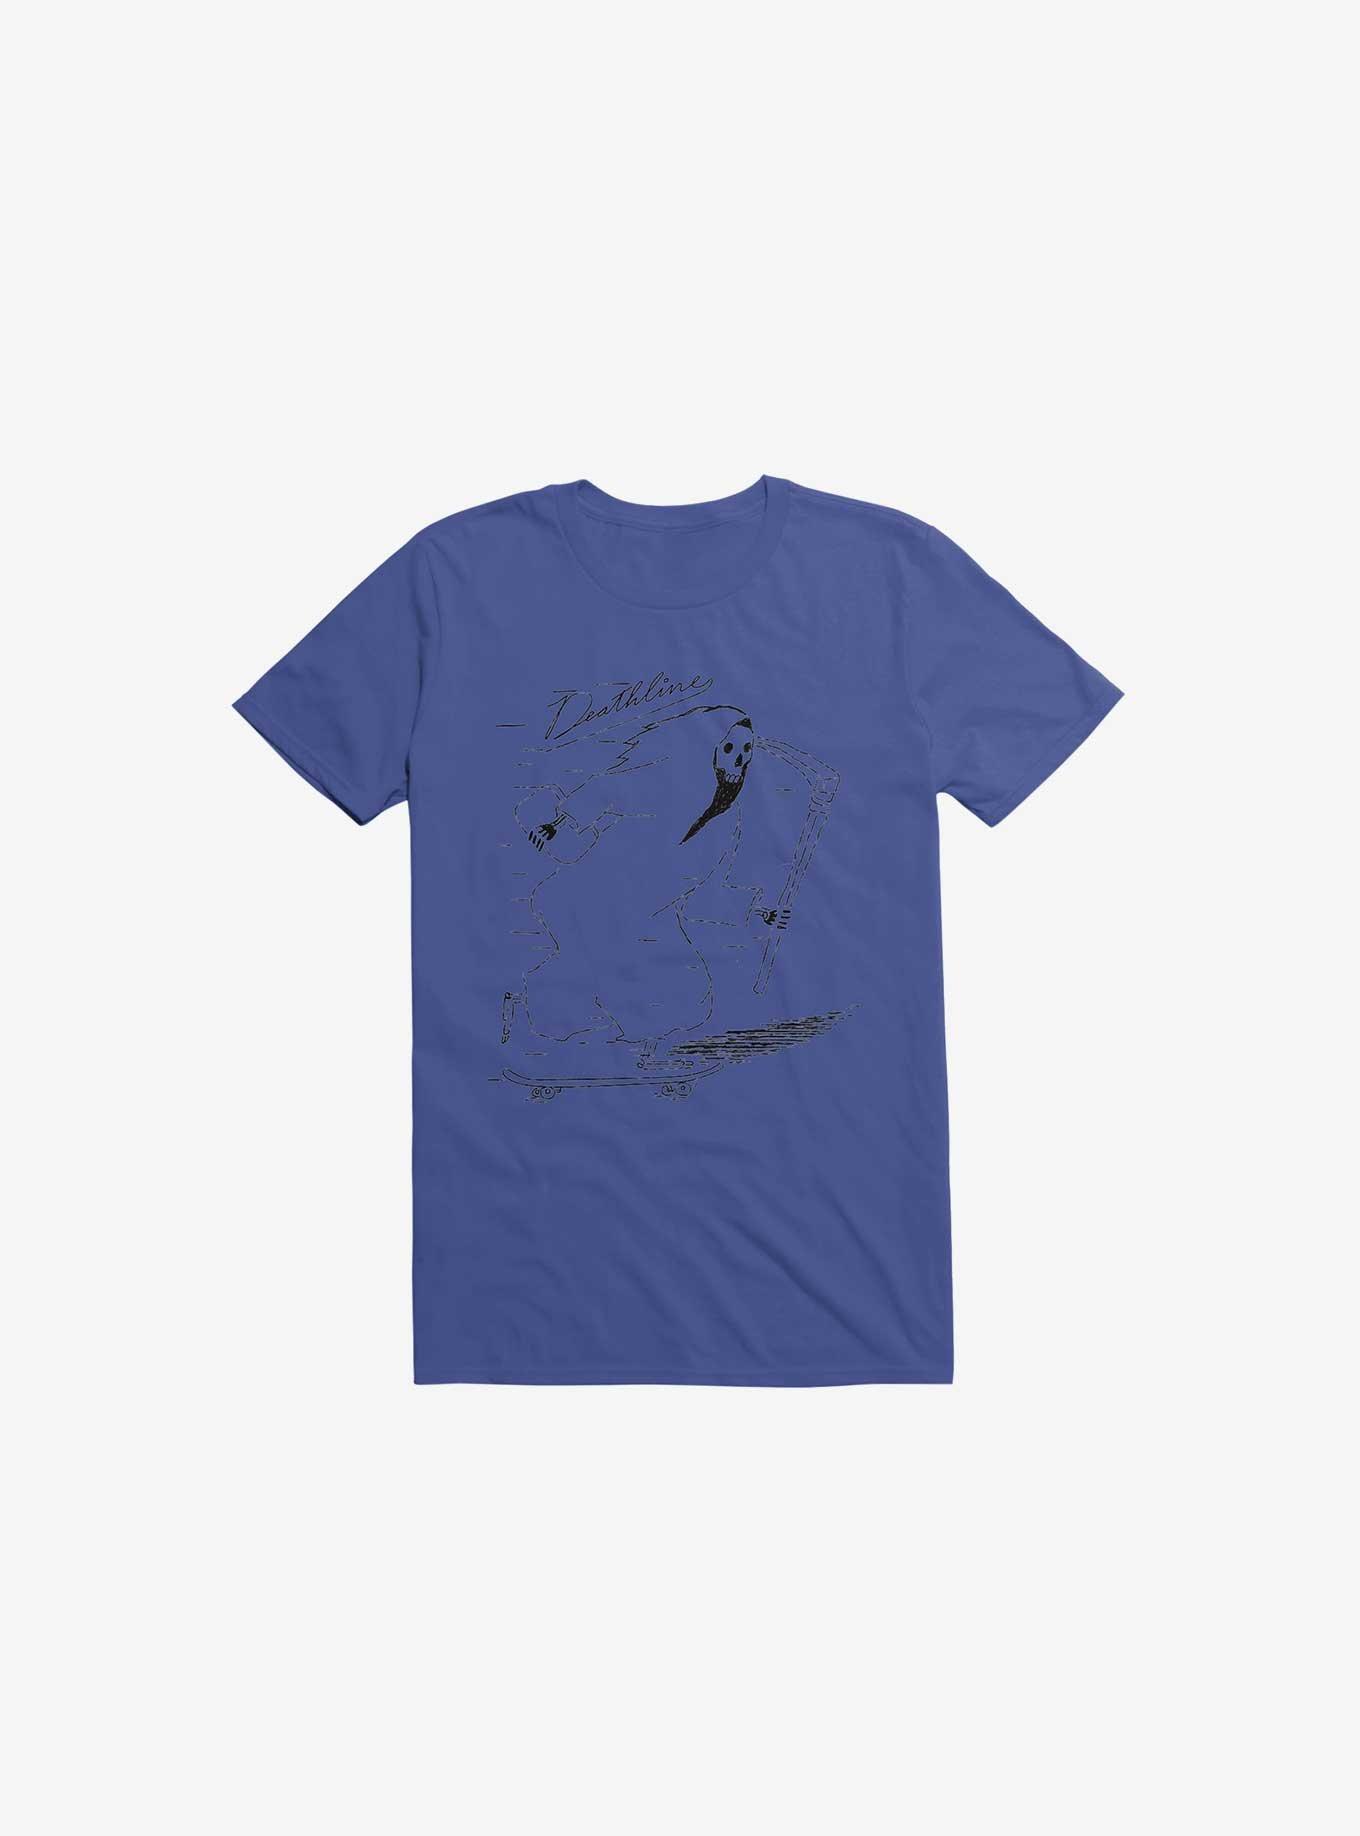 Deathline Reaper Royal Blue T-Shirt